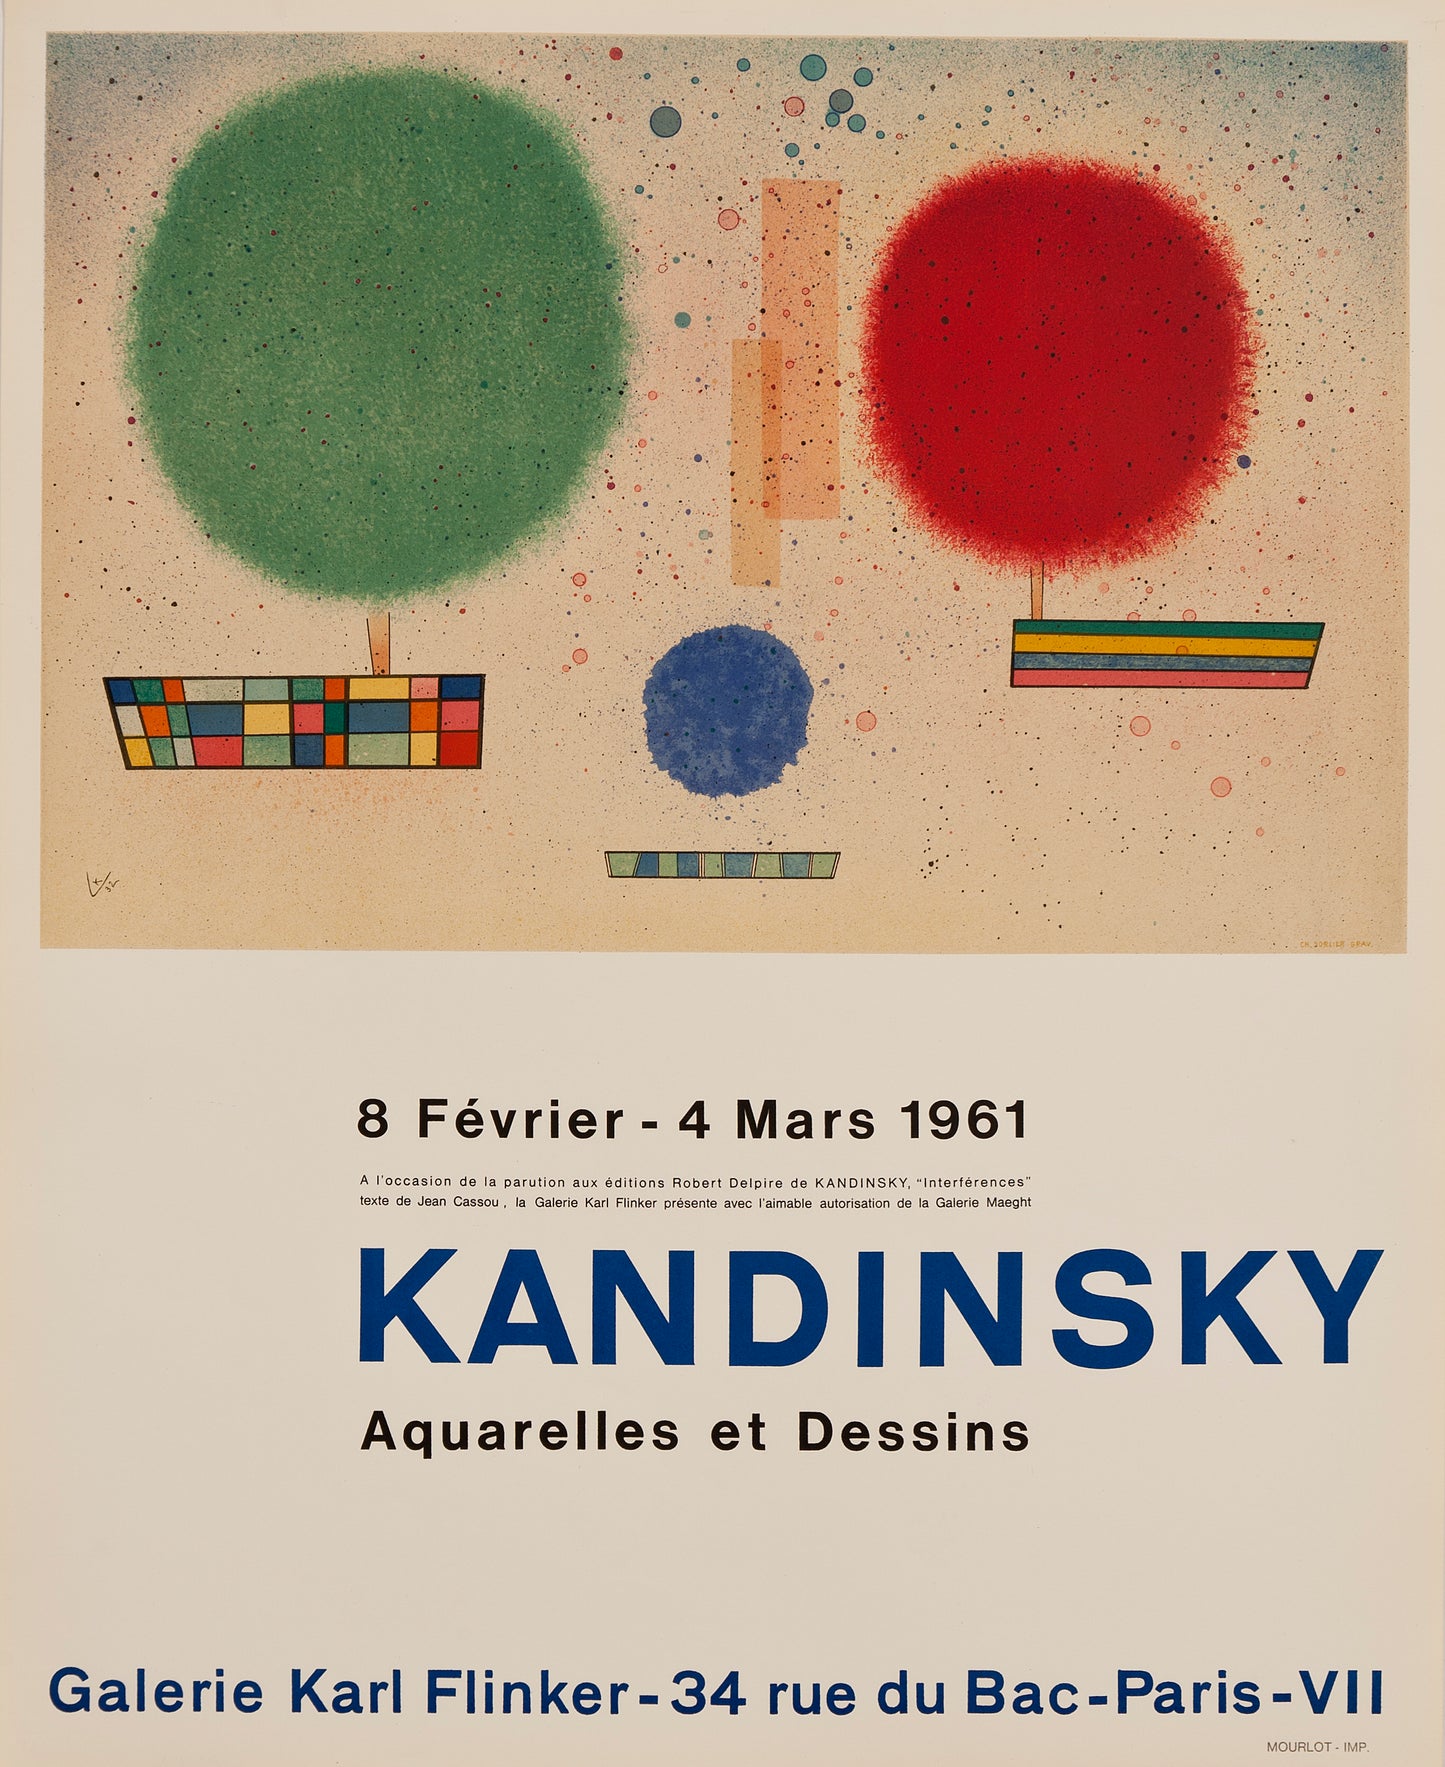 Aquarelles et Dessins - Galerie Karl Flinker (after) Wassily Kandinsky, 1961 - Mourlot Editions - Fine_Art - Poster - Lithograph - Wall Art - Vintage - Prints - Original